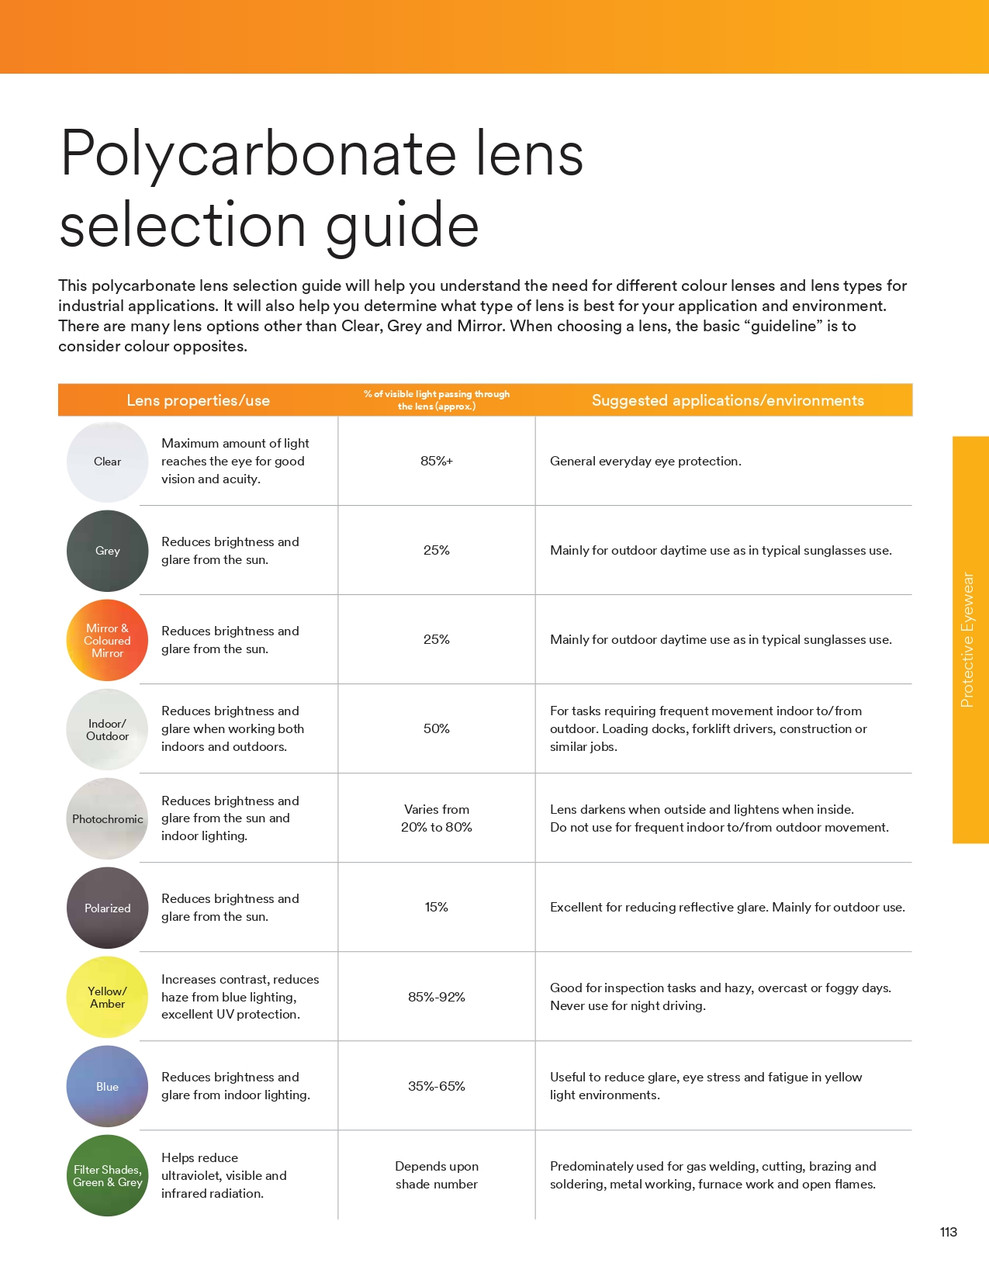 Solus Scotchgard® 1000 Series Safety Glasses w/Clear Lens  S1101SGAF